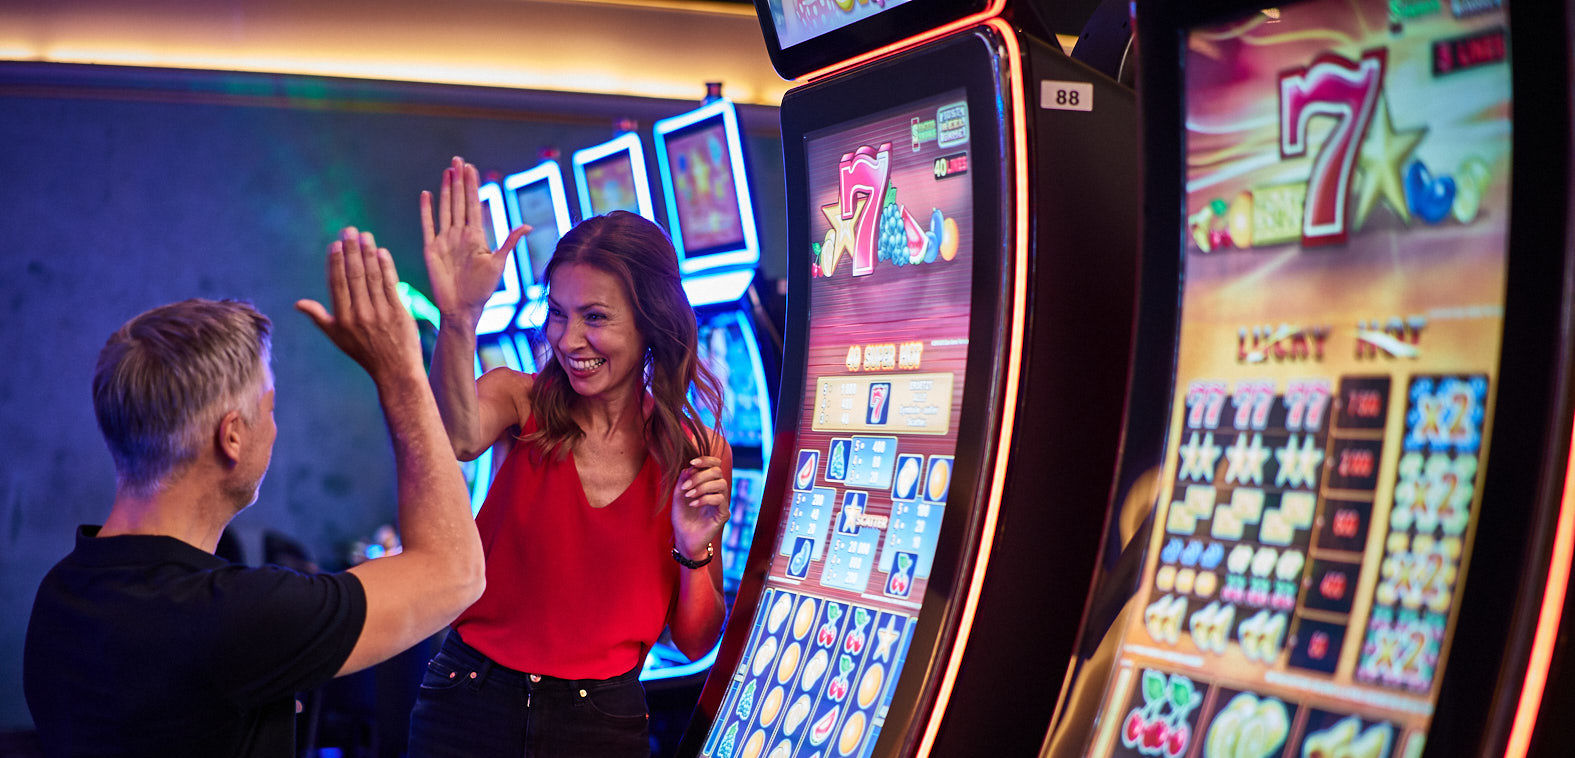 Mann und Frau feiern am Spielautomaten im Casino